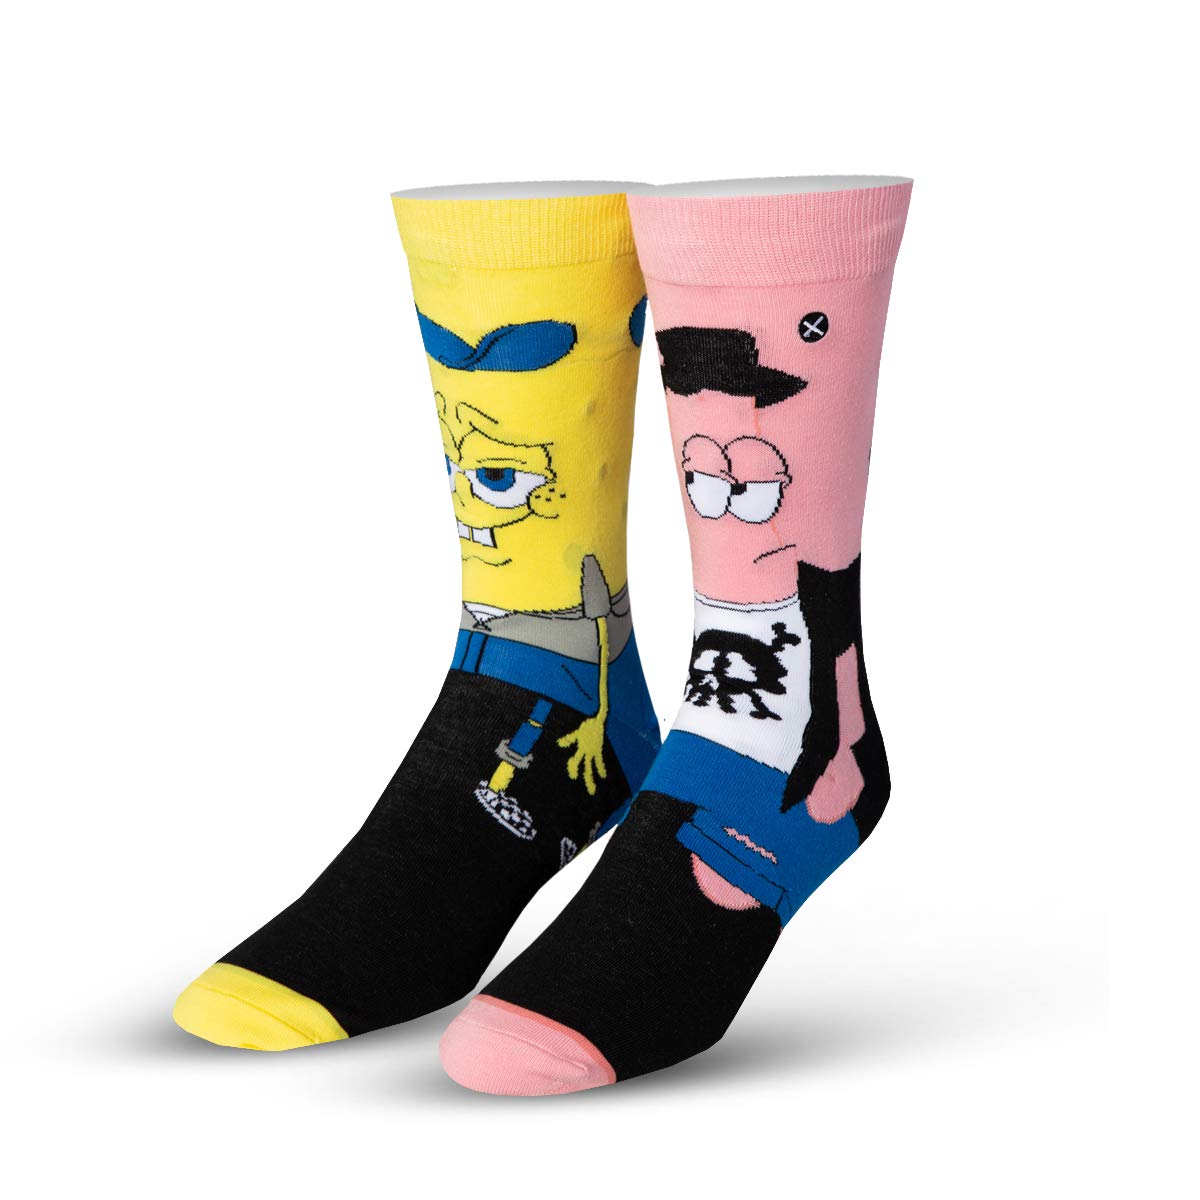 Odd Sox, Unisex, Nickelodeon, SpongeBob SquarePants Socks, Cartoon Novelty Socks